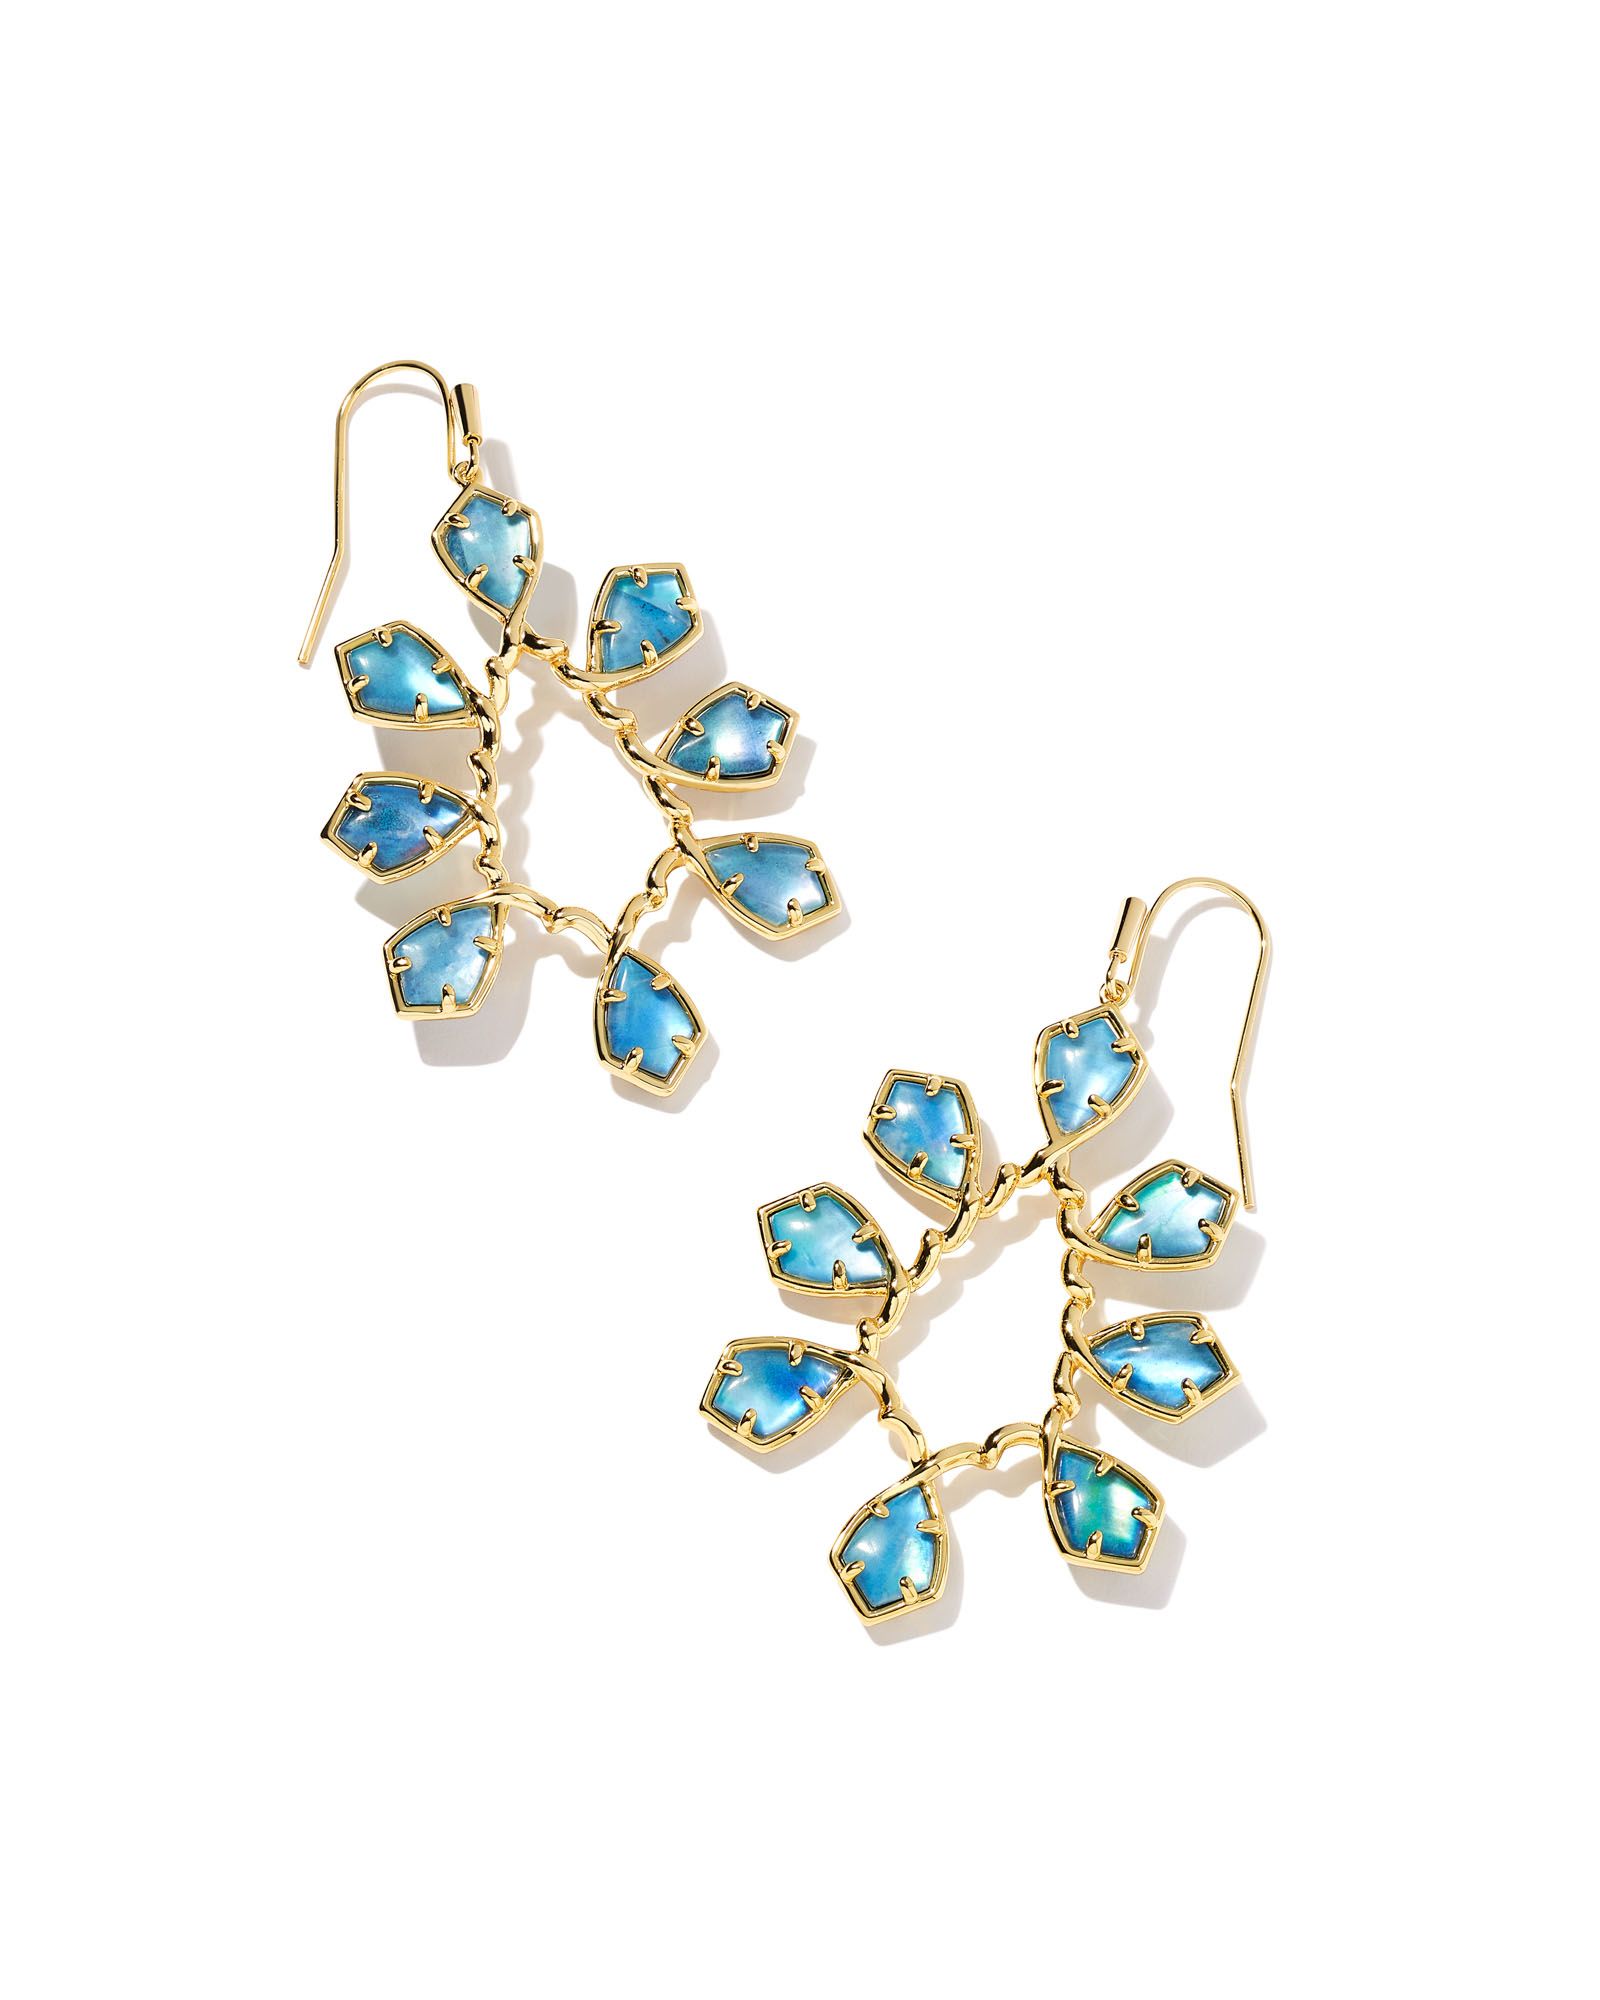 Camry Gold Open Frame Earrings in Dark Blue Mother-of-Pearl | Kendra Scott